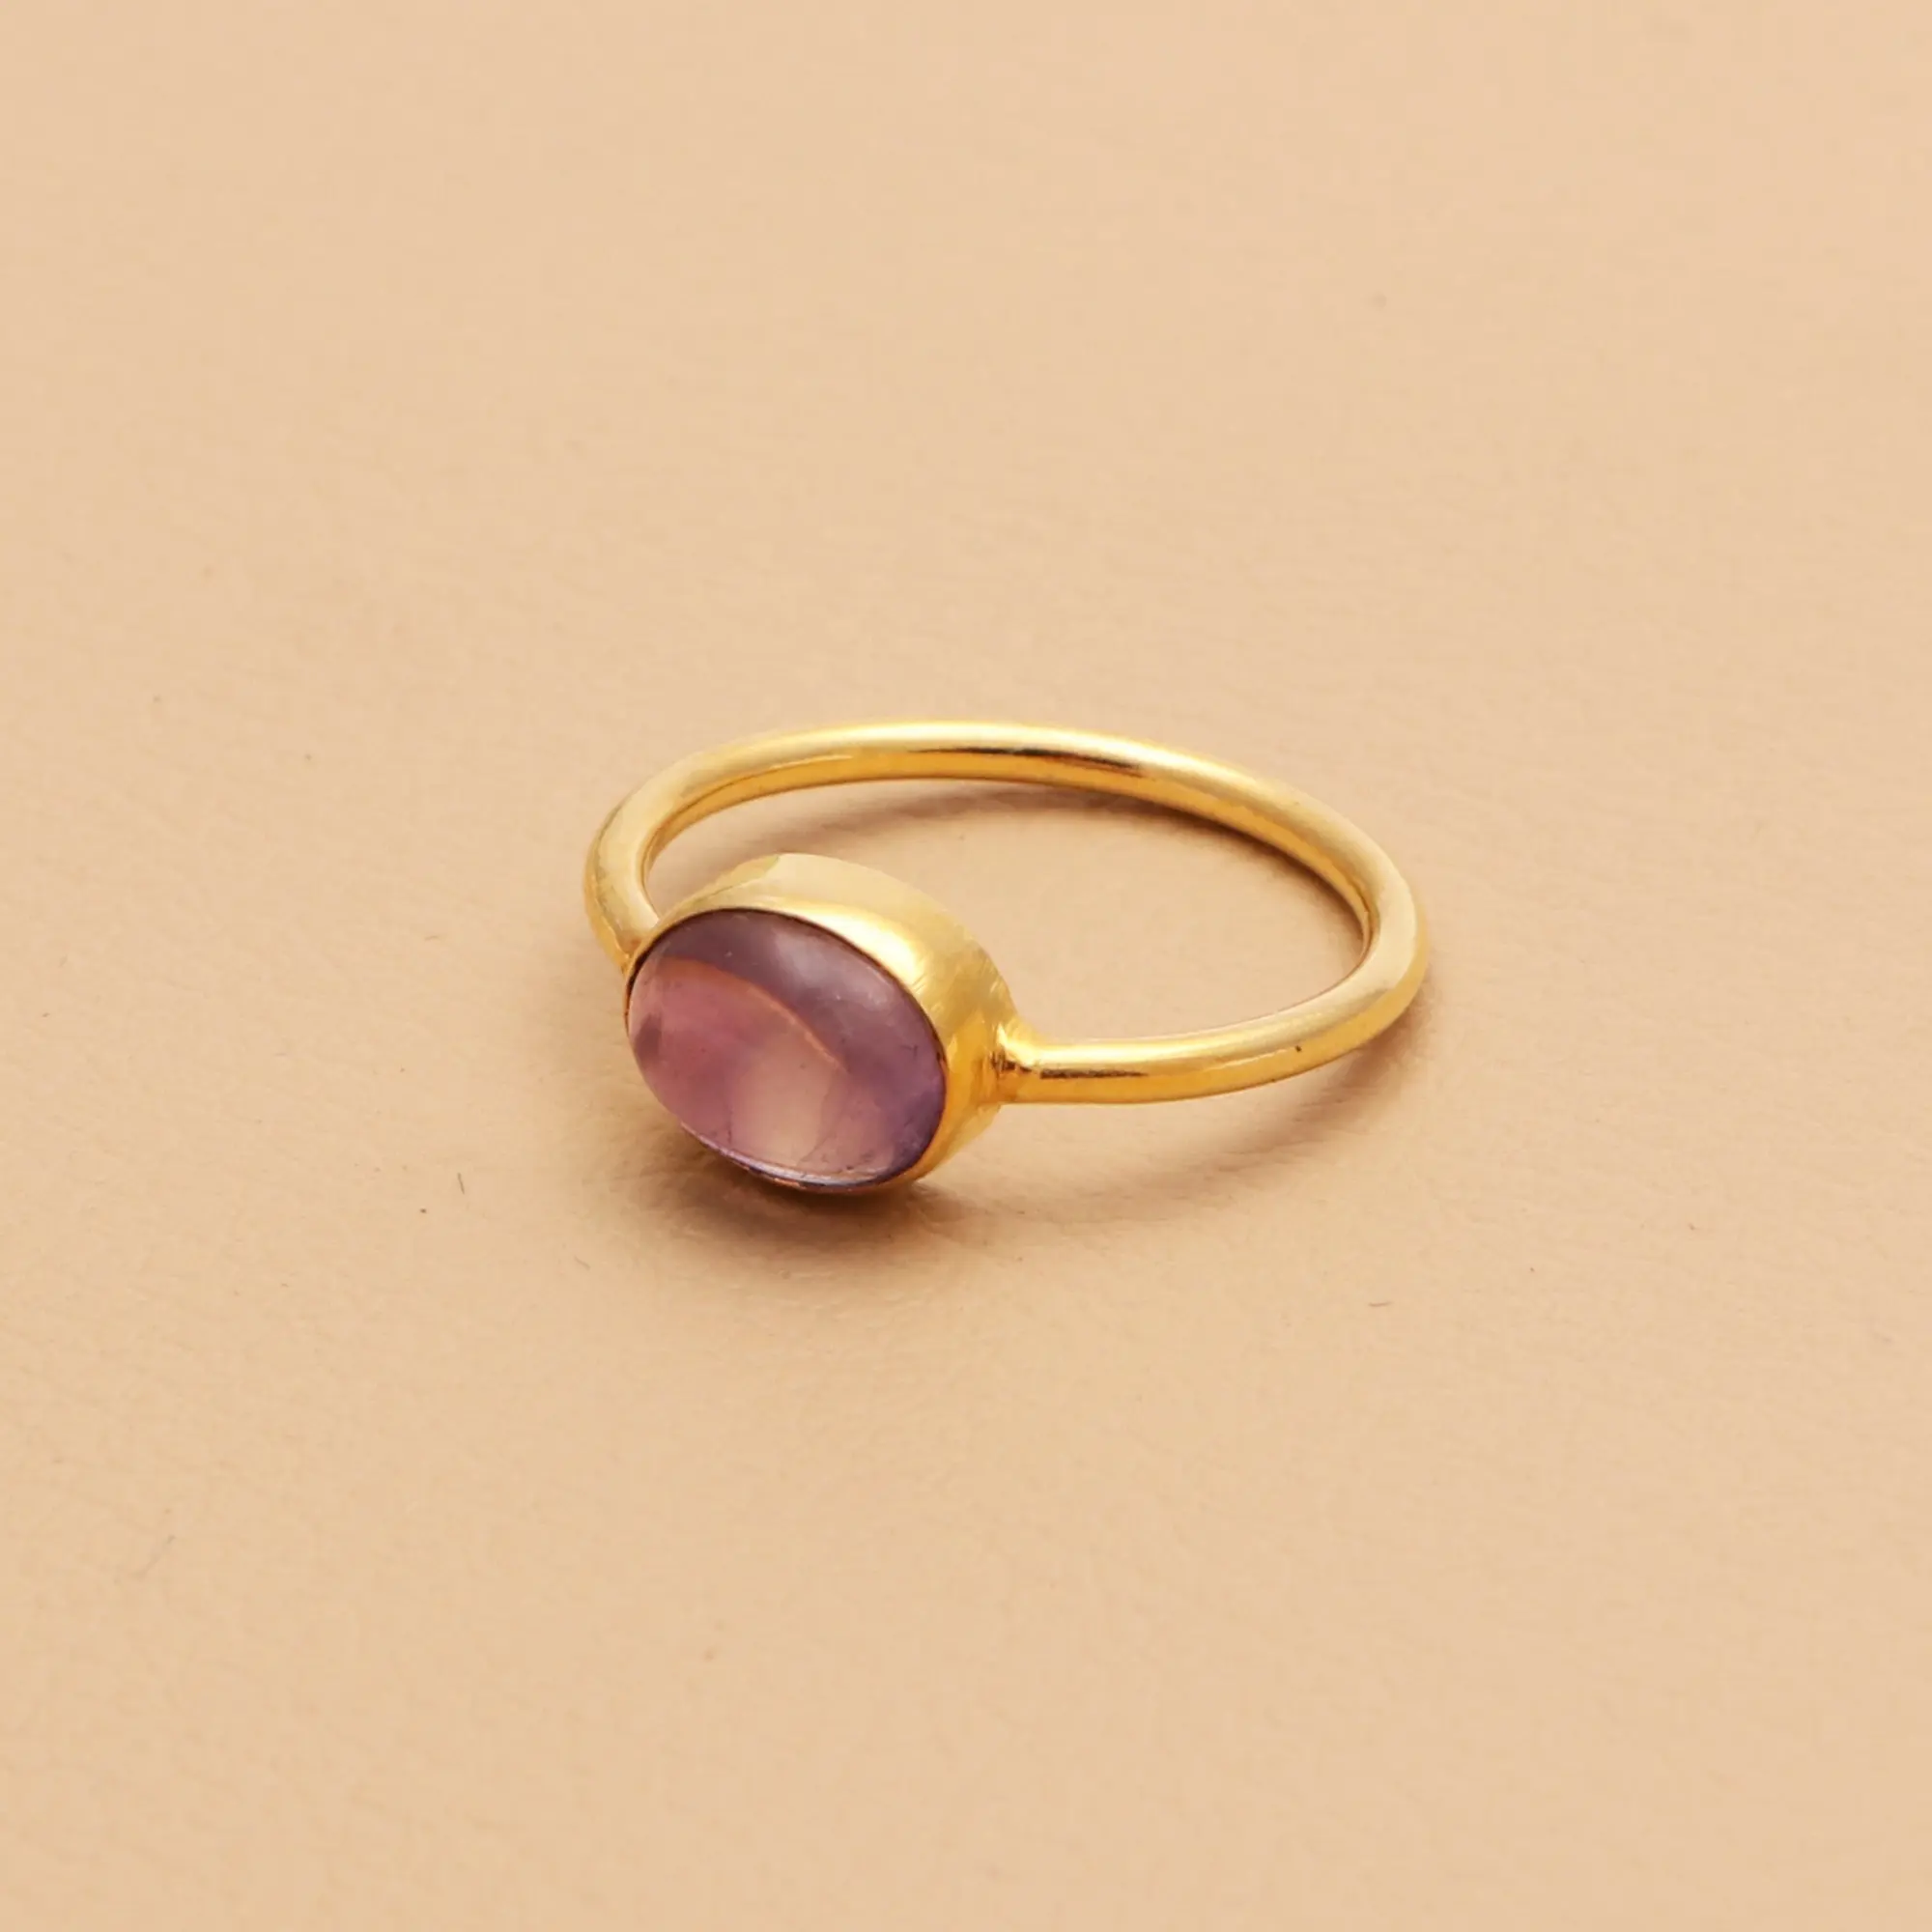 Women ring handmade designer jewelry purple amethyst wedding ring 24k gold plated gemstone handmade supplies jewelry gift items